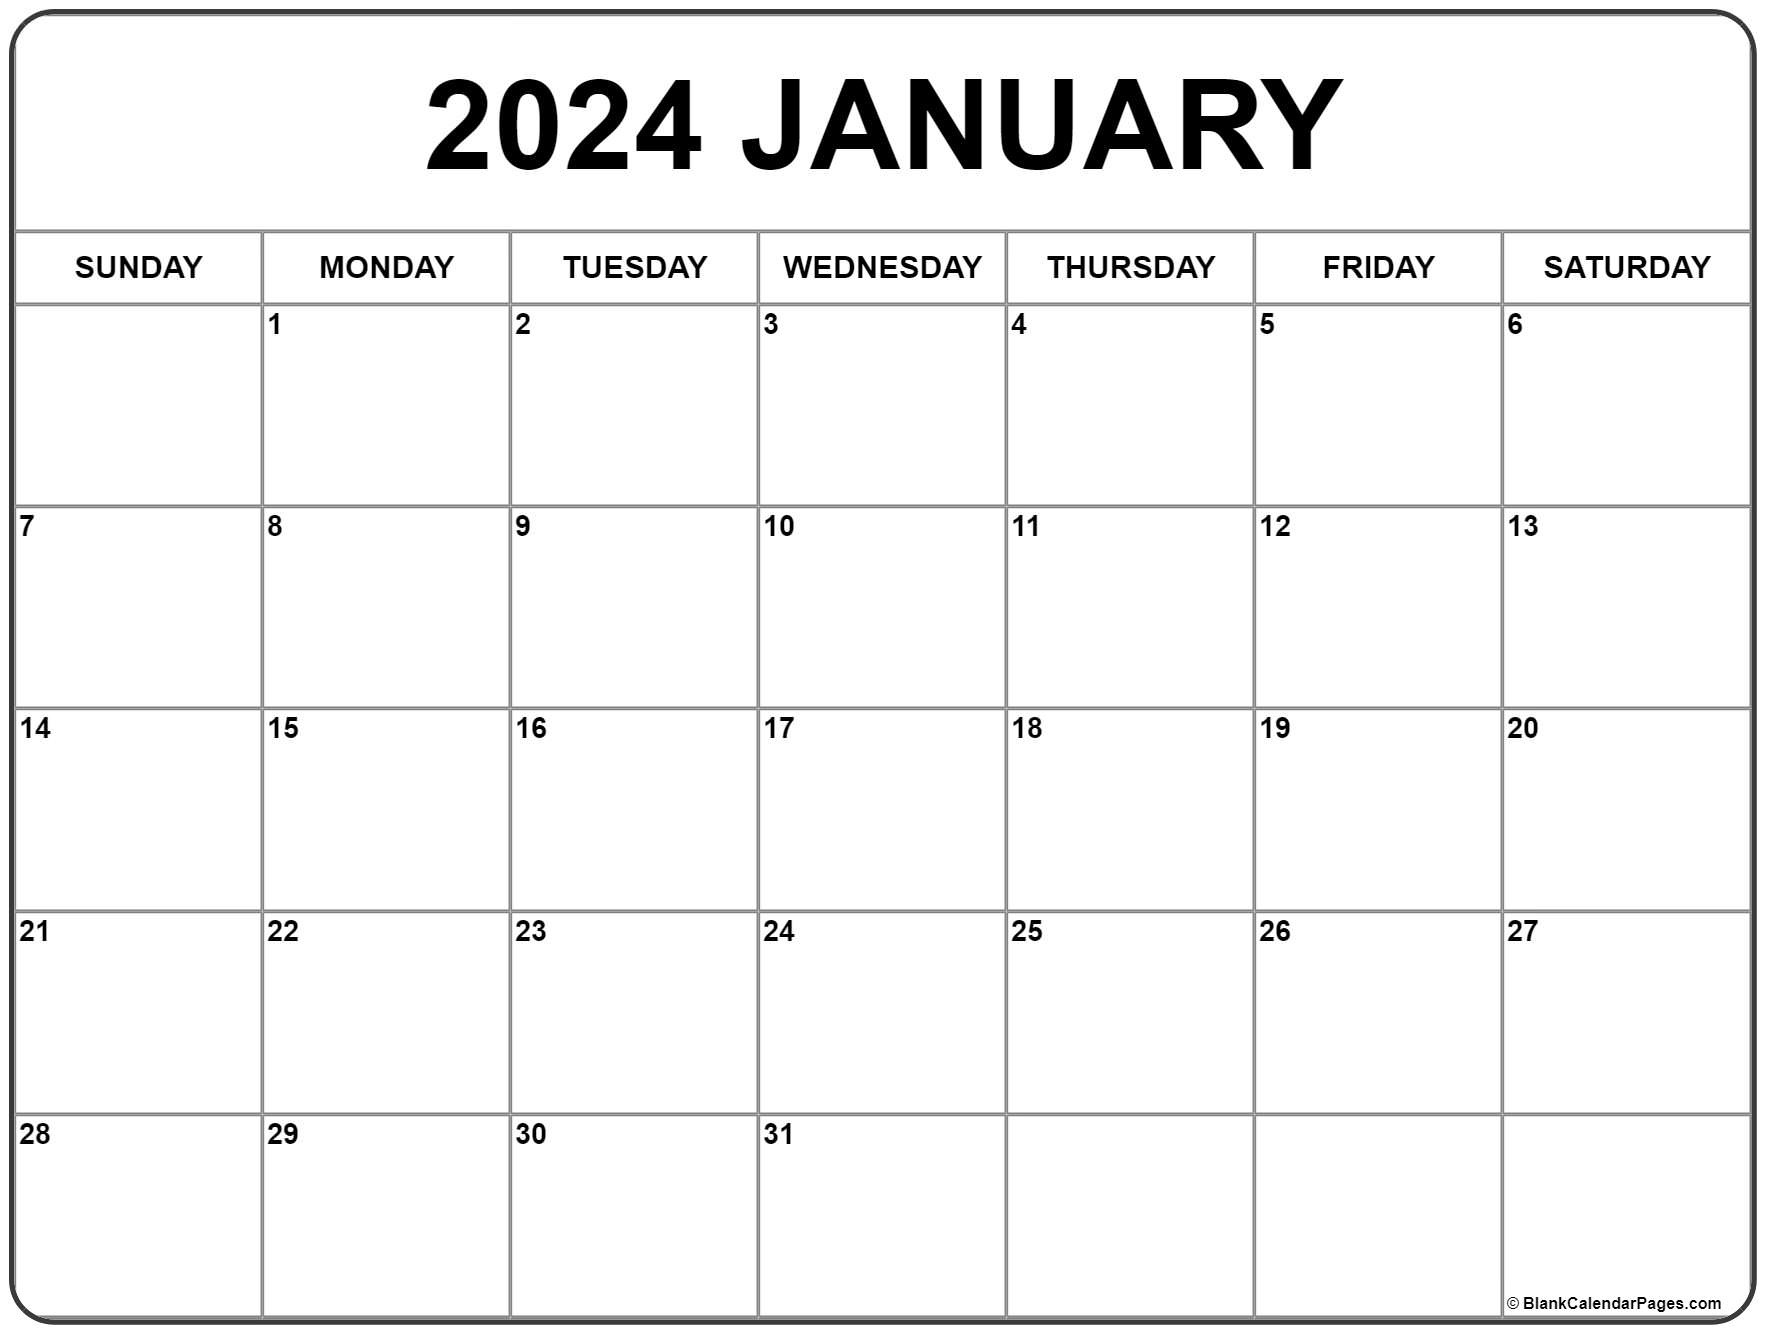 January 2024 Calendar | Free Printable Calendar for January 2024 Month Calendar Printable